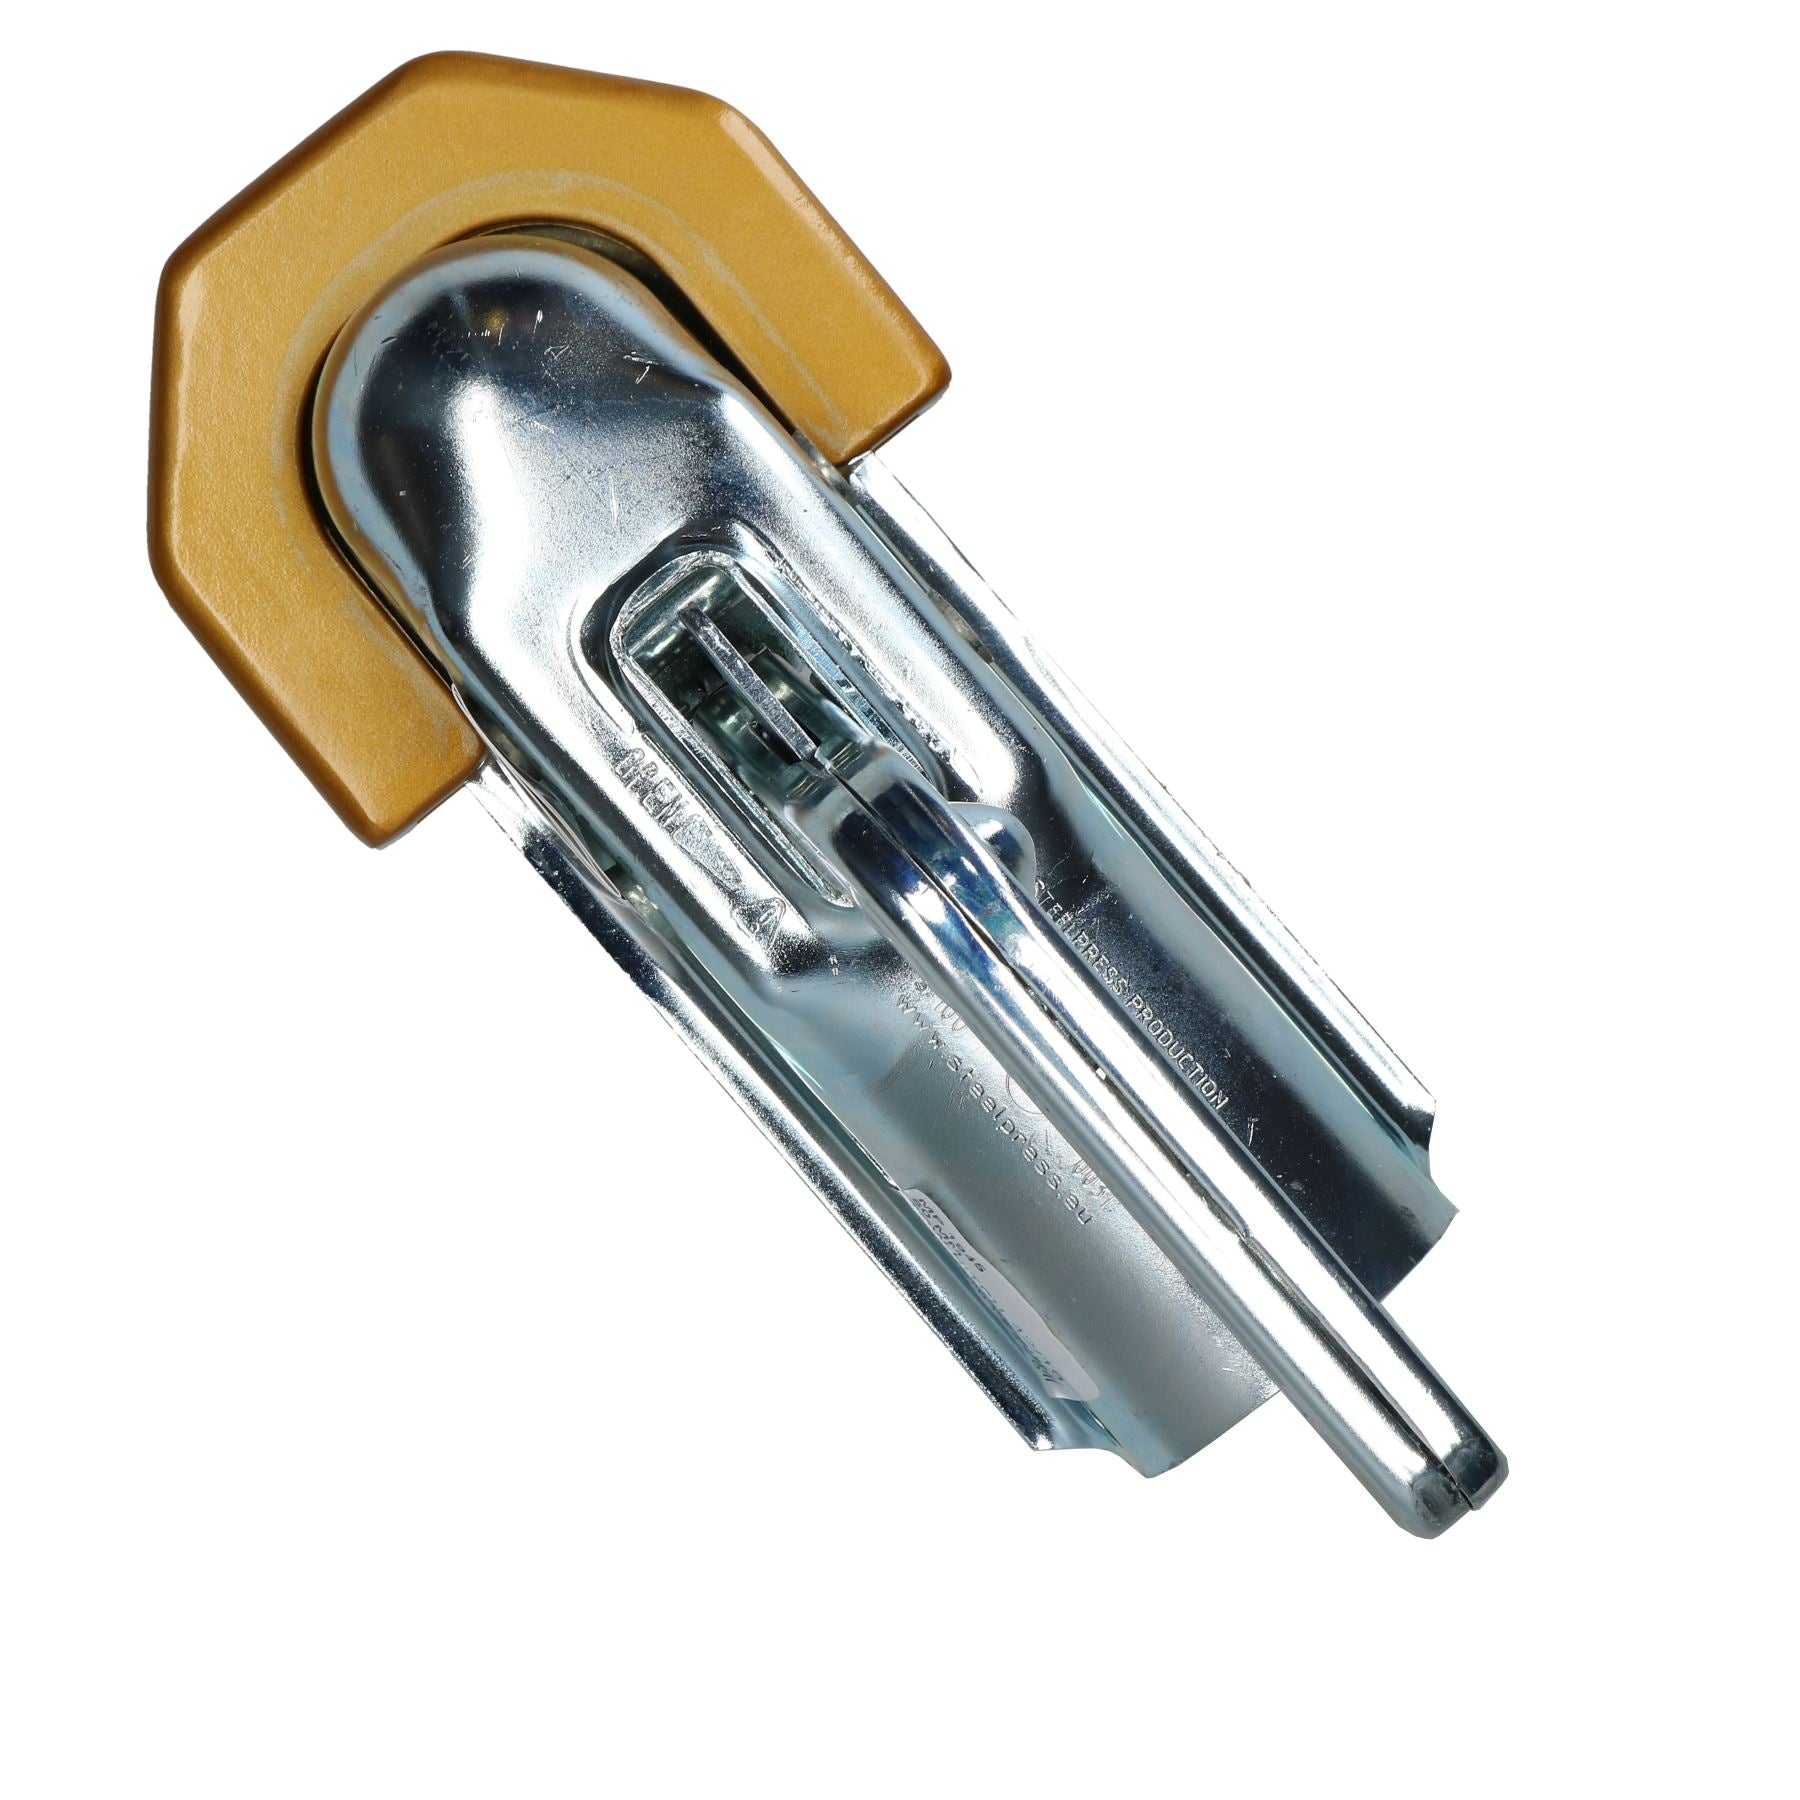 Trailer Hitch Coupling Lock / Caravan Security Lock for Pressed Steel Couplings